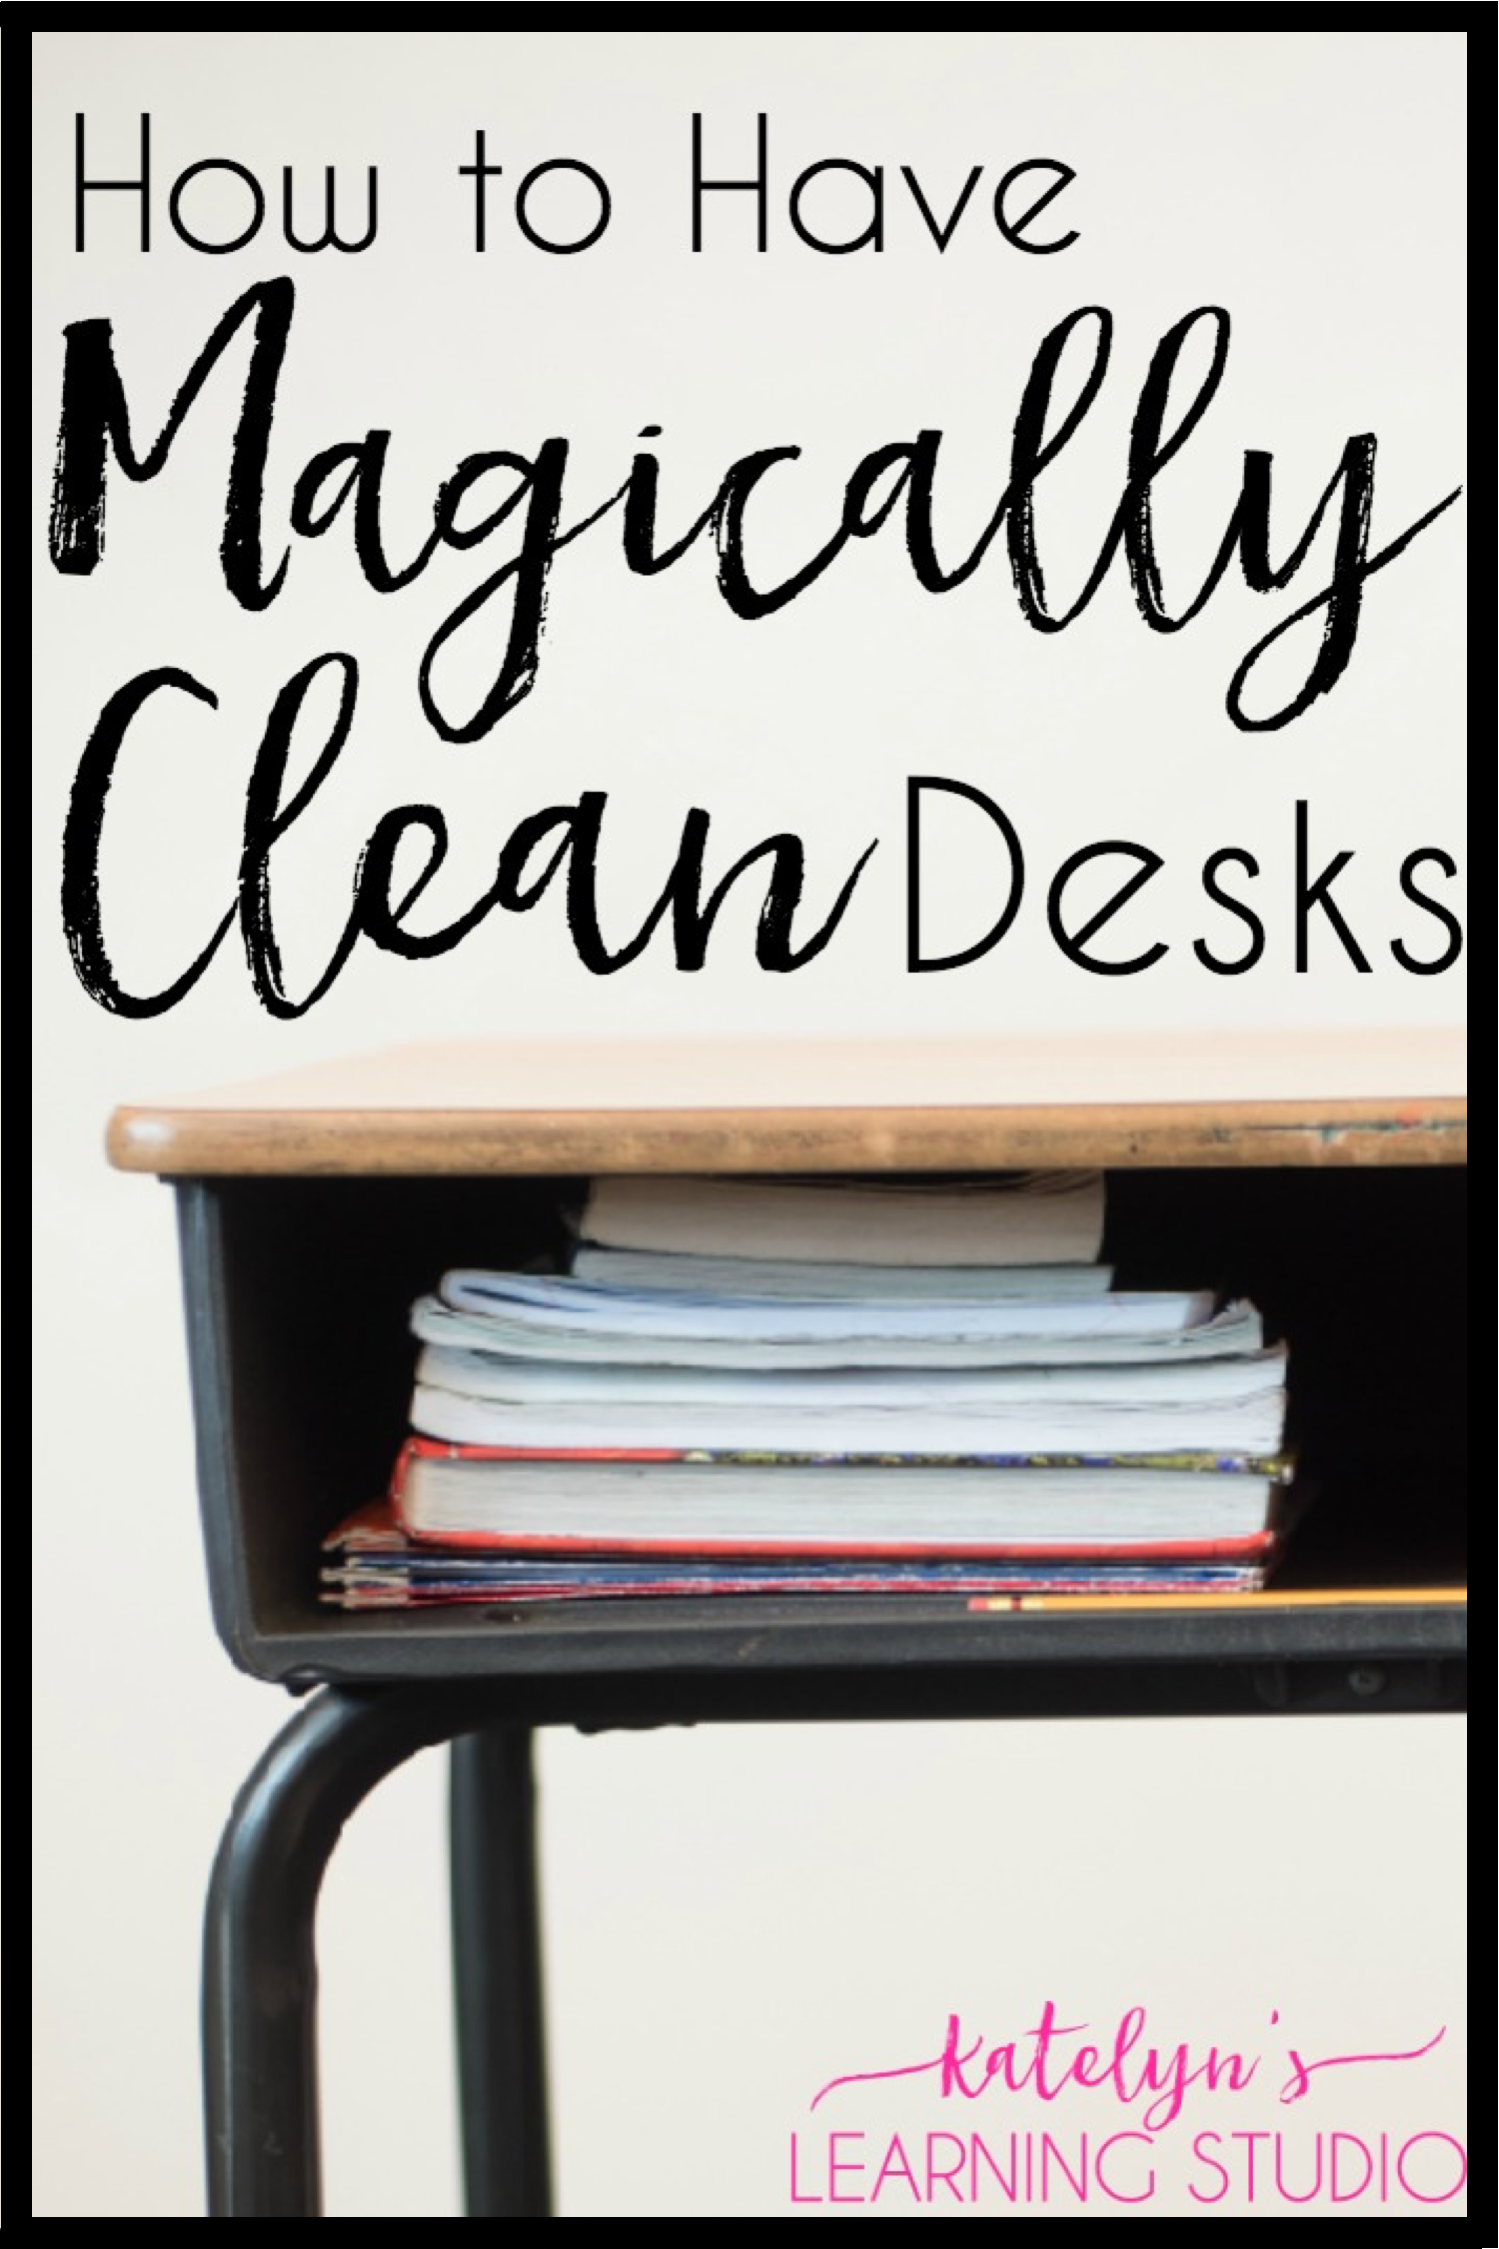 https://katelynslearningstudio.com/wp-content/uploads/2019/02/Magically-Clean-Desks-Pinnable-Image.png